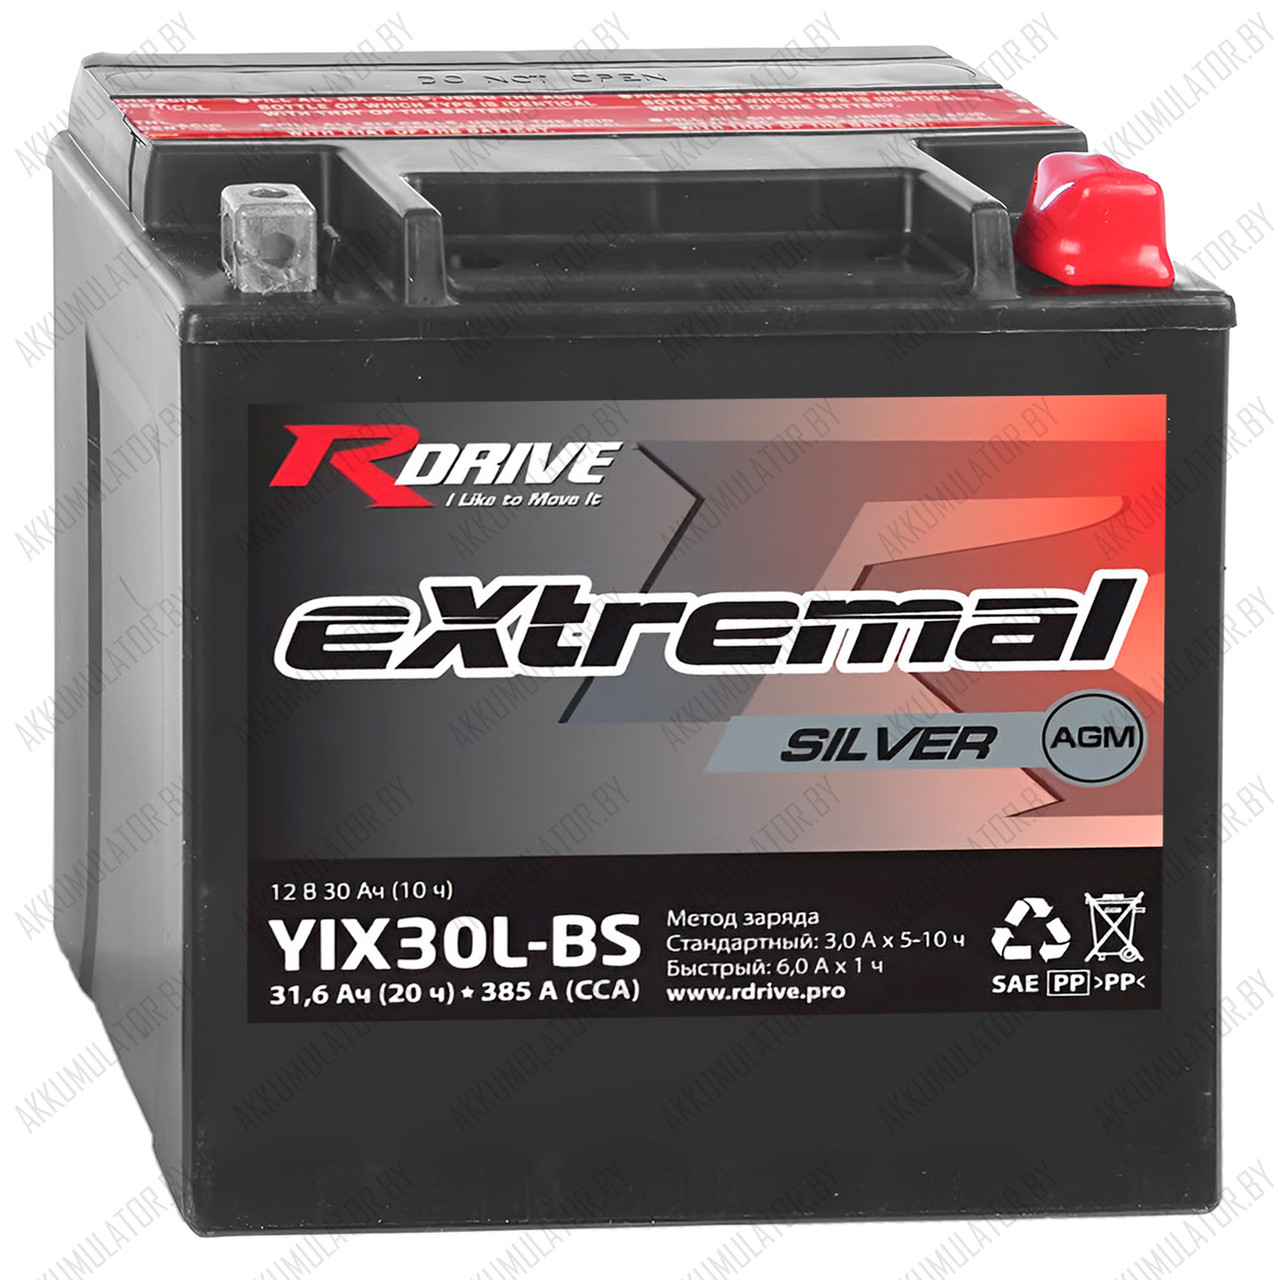 RDrive eXtremal Silver YIX30L-BS / 31,6Ah